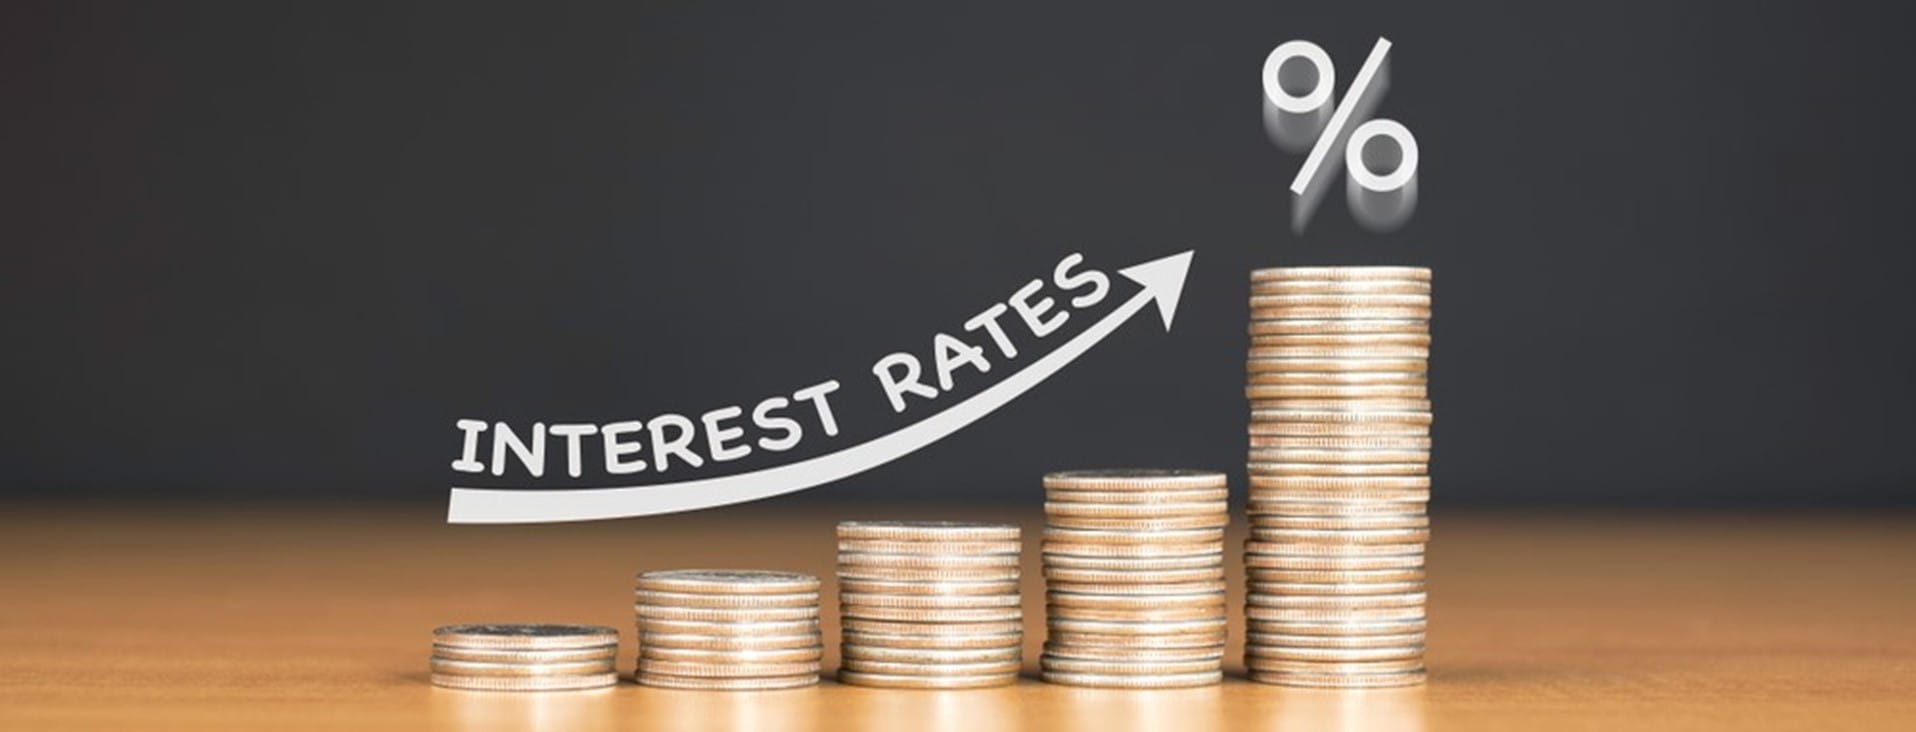 Interest rates increasing.